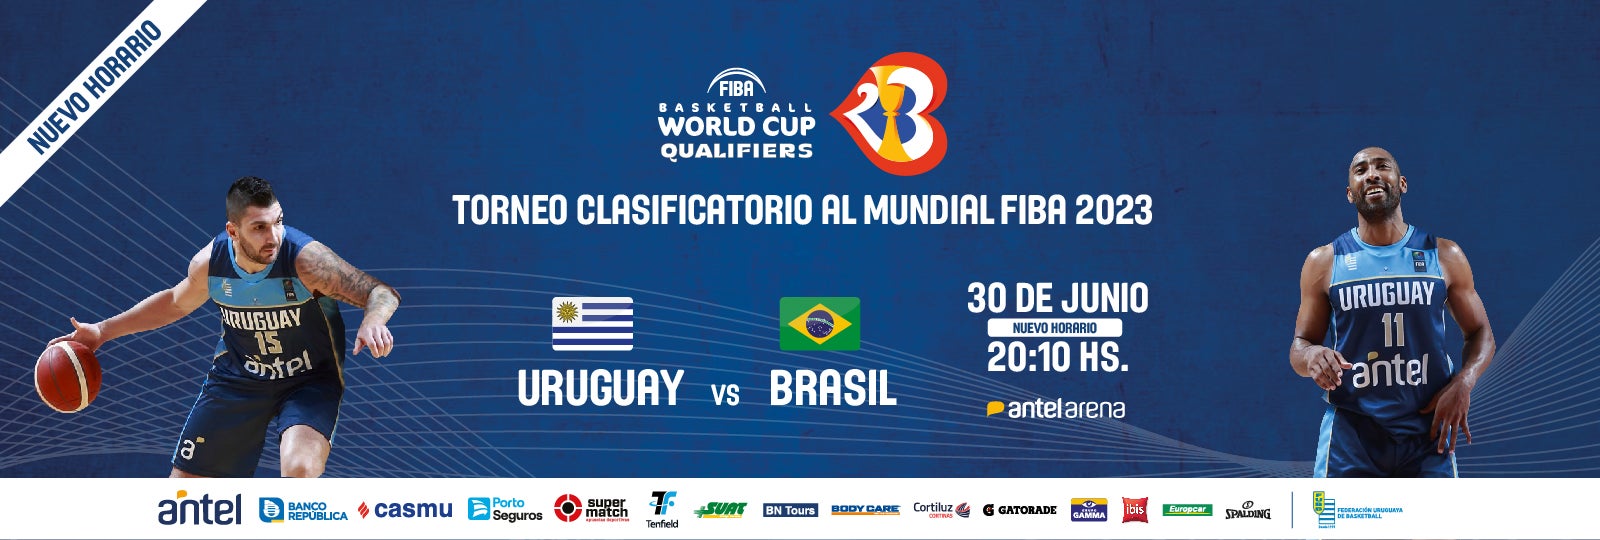 Torneo Clasificatorio Mundial FIBA 2023 | Antel Arena